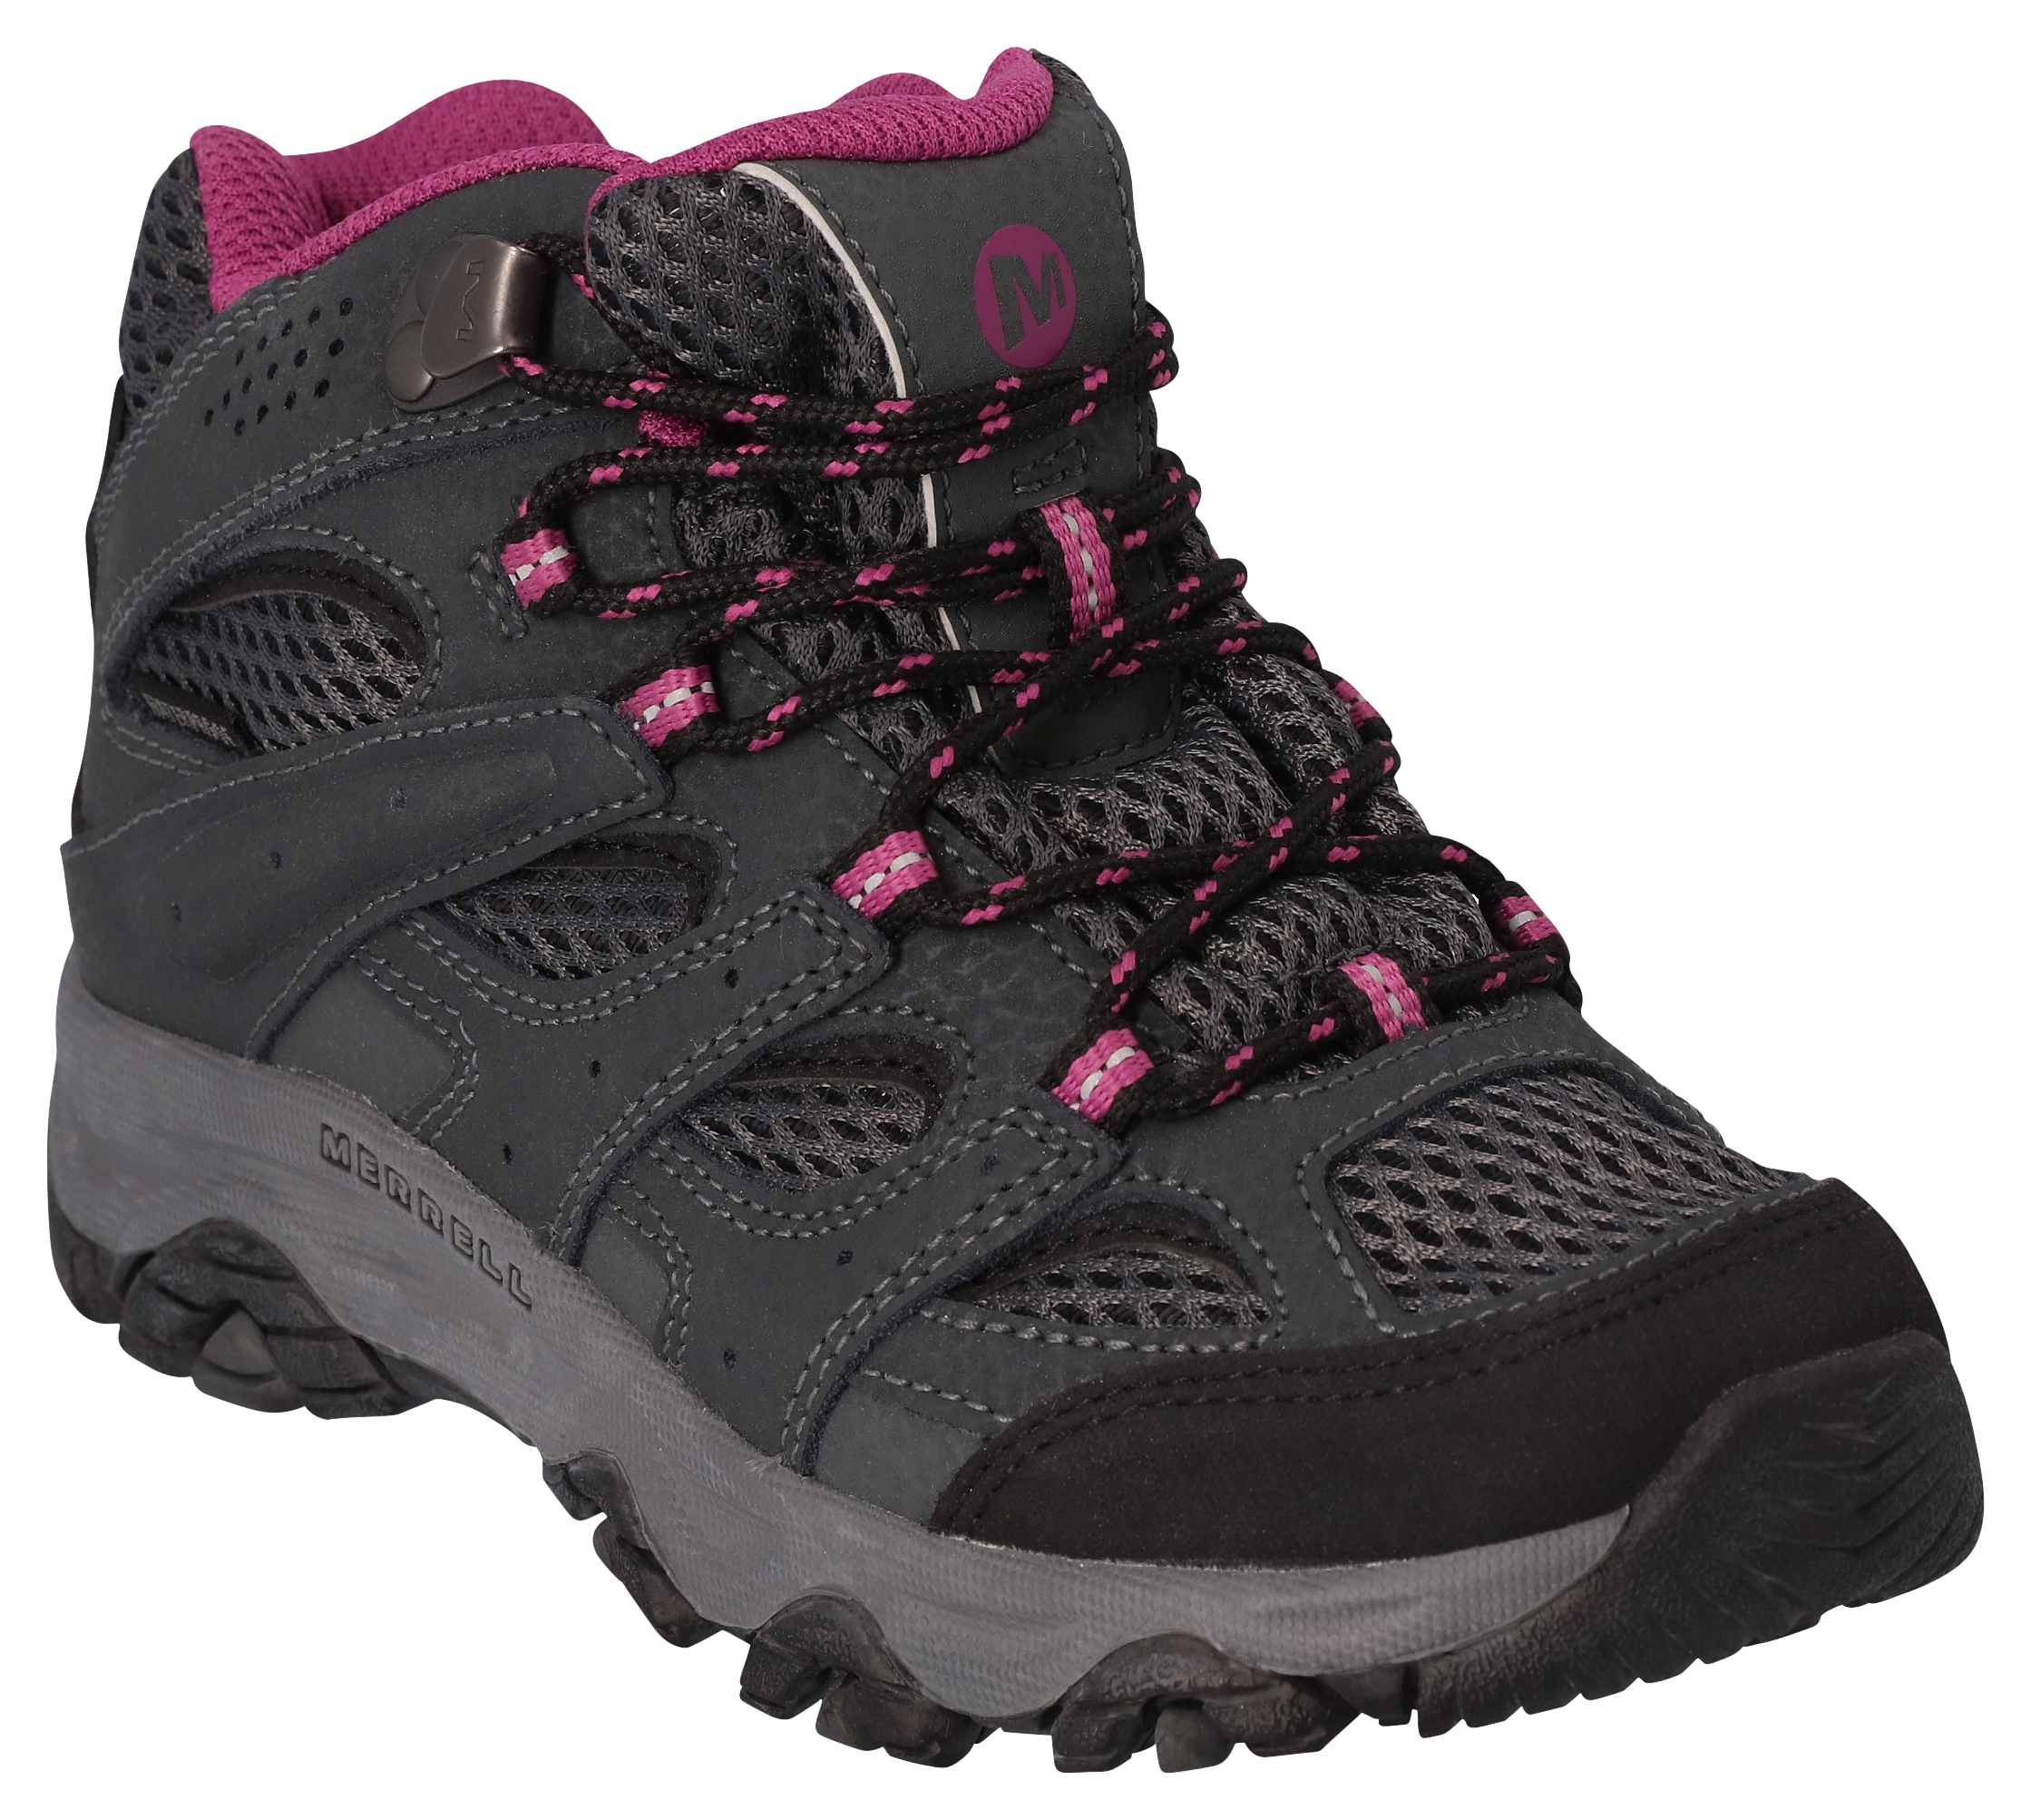 Merrell Moab III Mid Waterproof Hiking Boots for Kids - Granite - 6 Kids